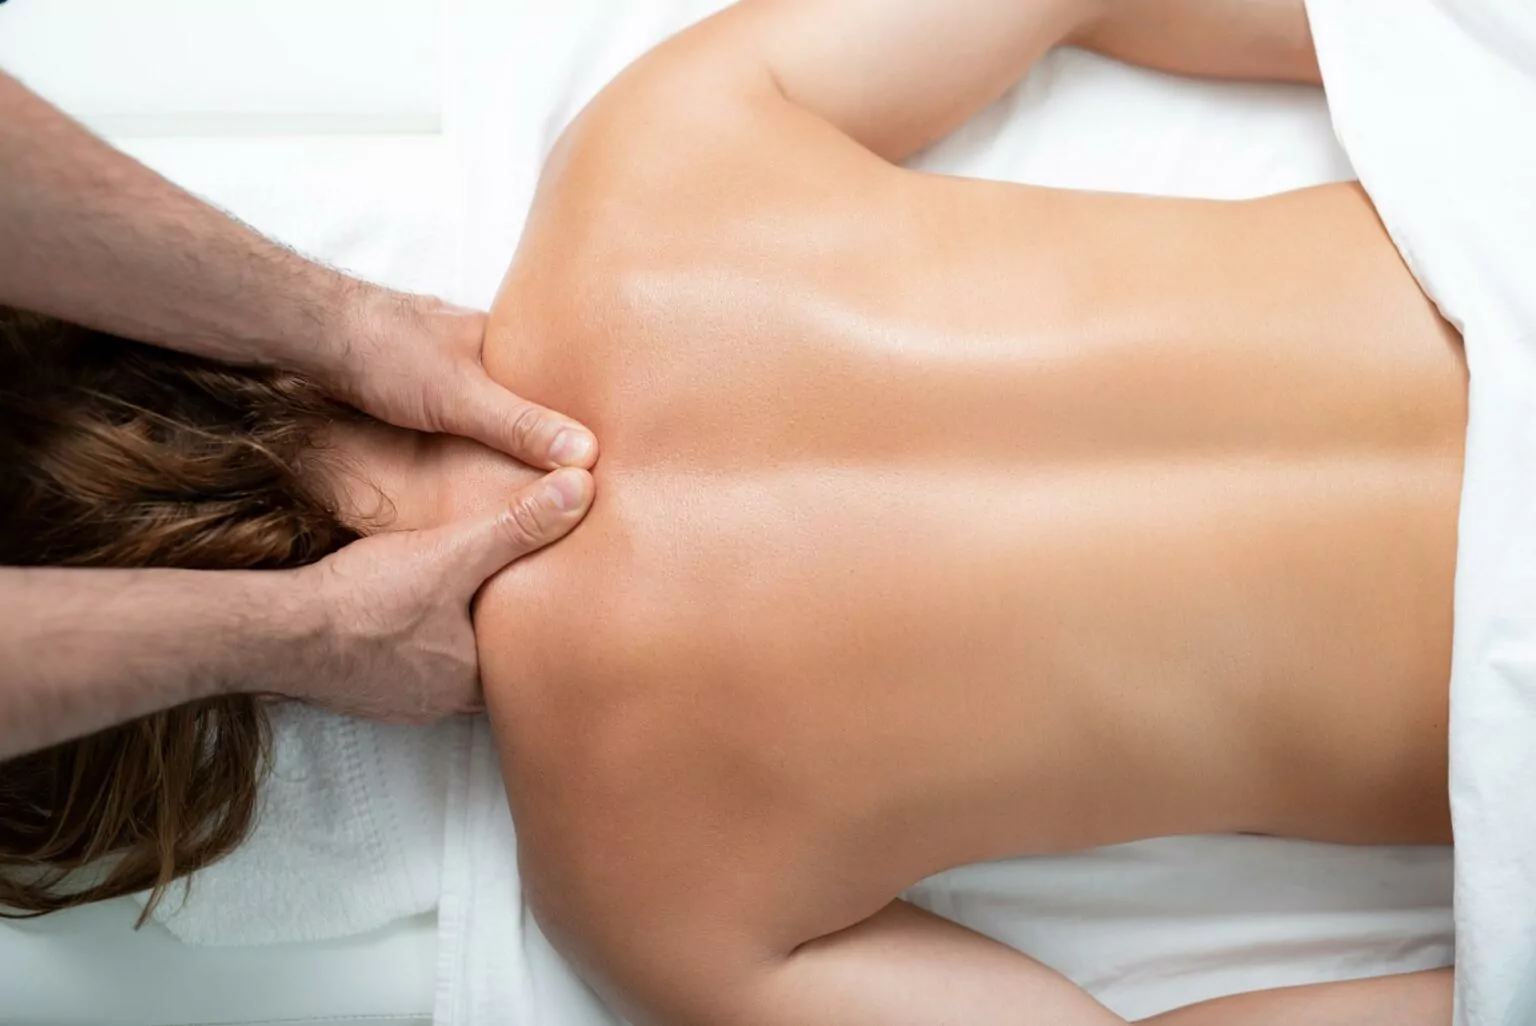 image_upload/landhotel-rittmeister-spa-massage-1536x1026.jpg.webp